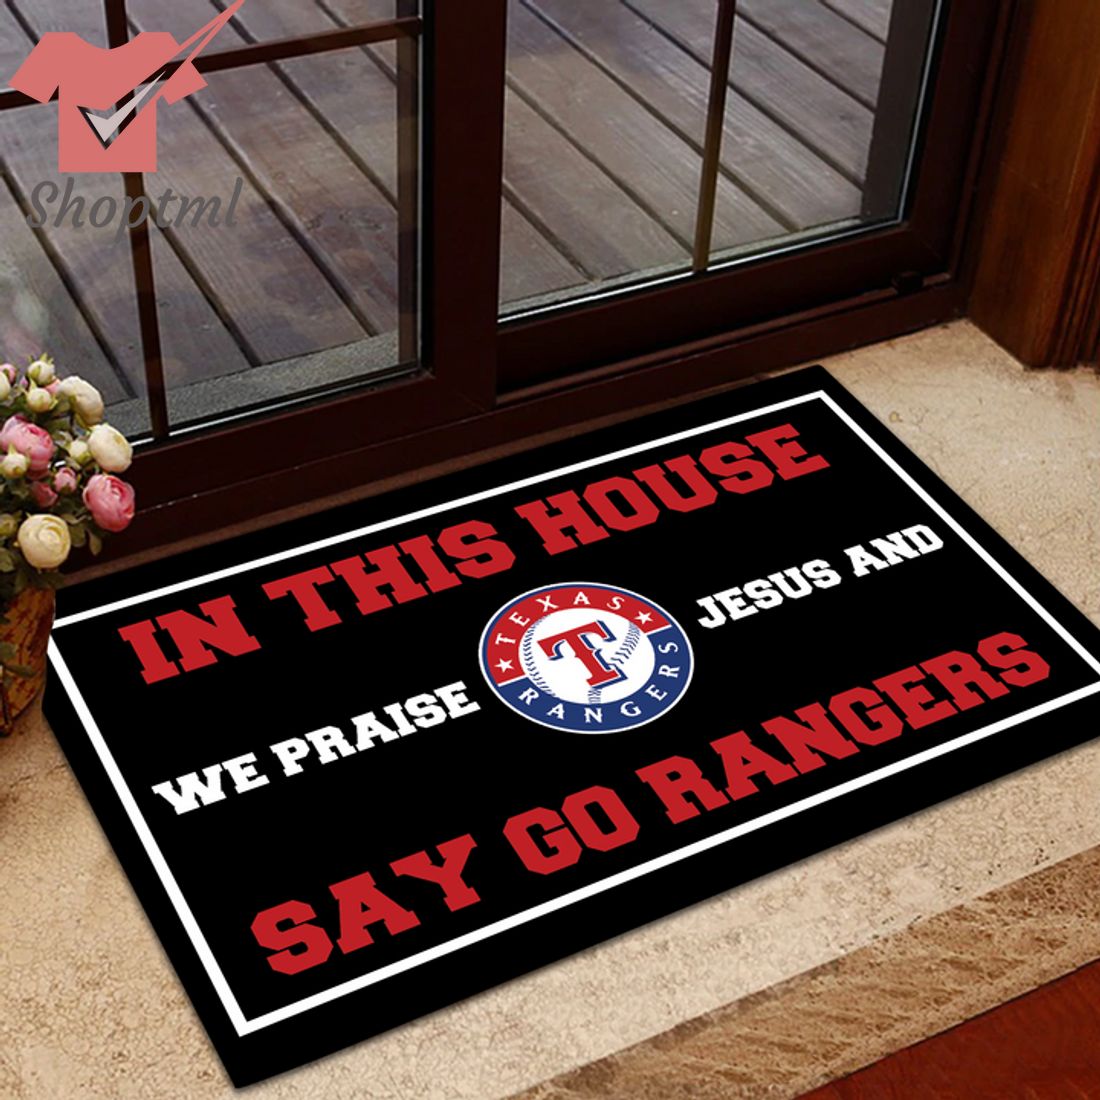 Texas Rangers In This House We Praise Jesus Doormat